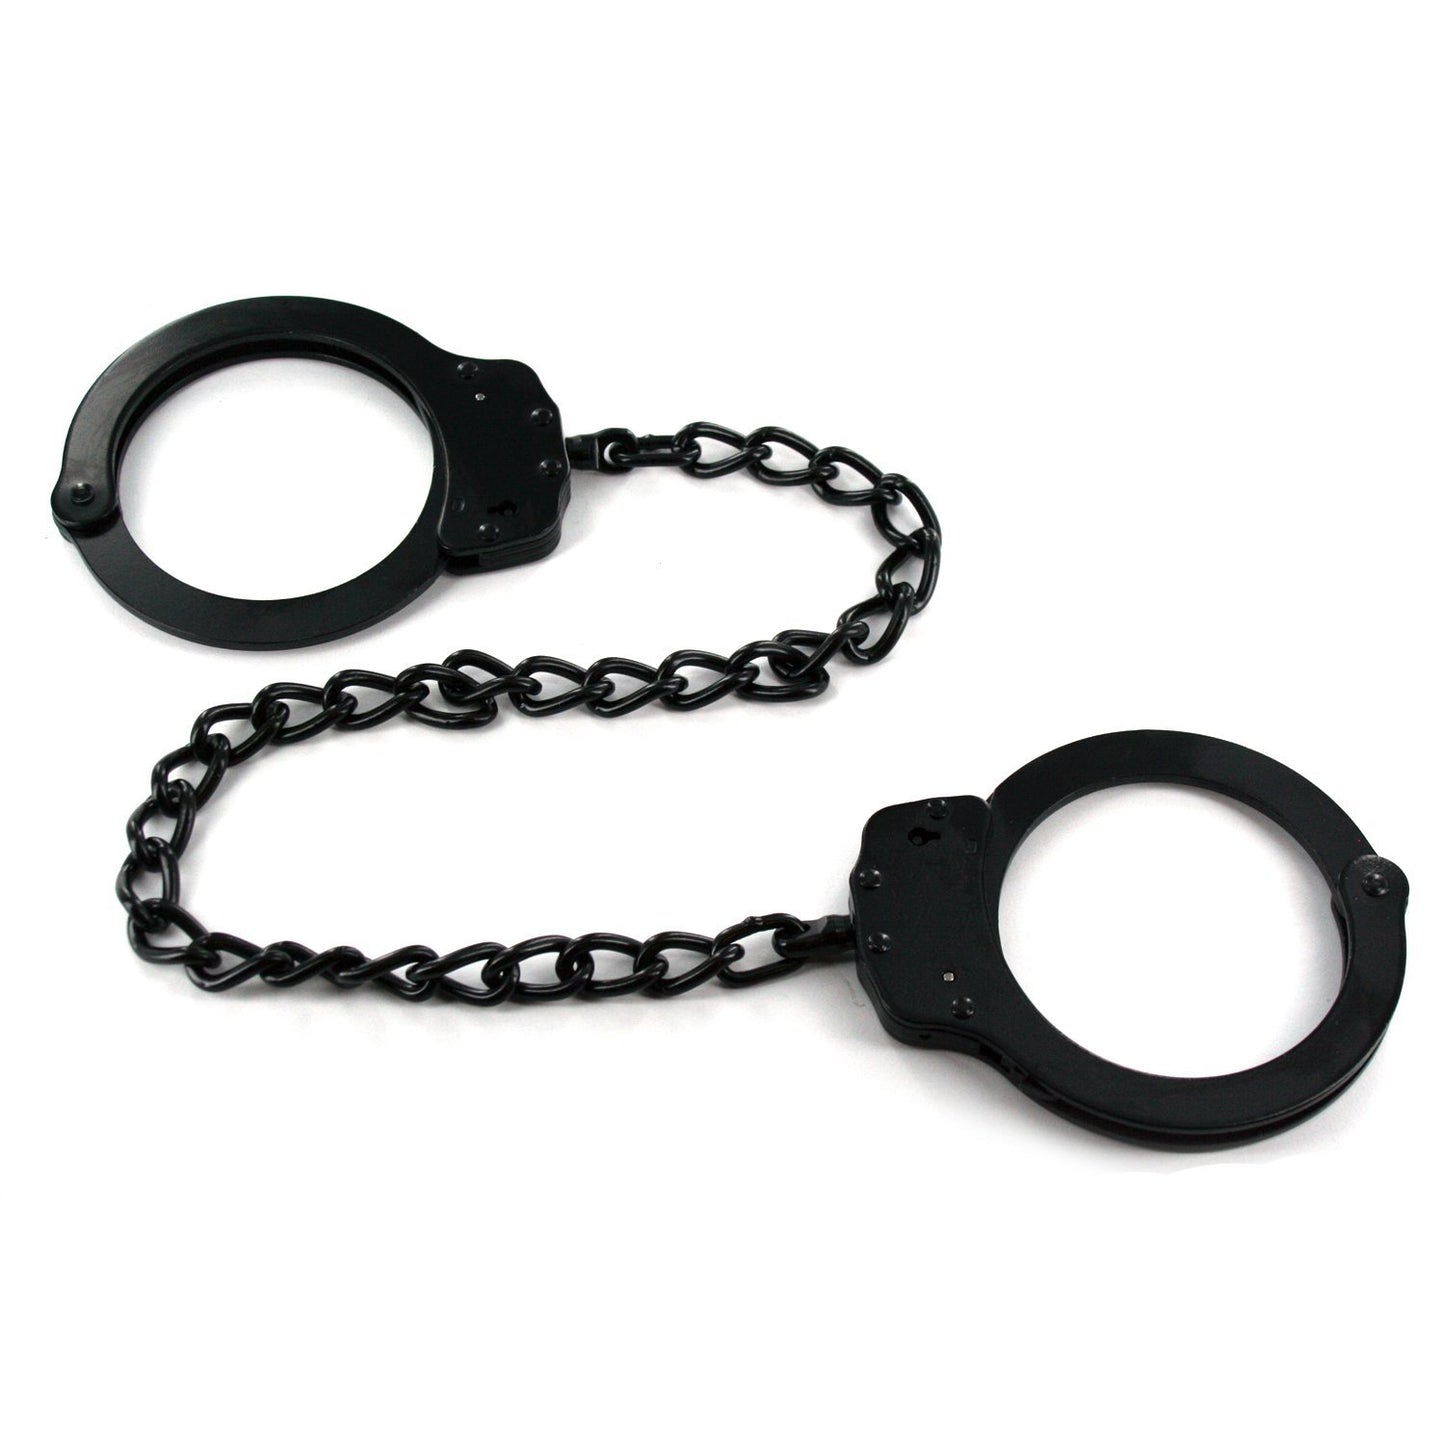 Steel Double Locking Leg Cuffs w/ 18" Chain - Black